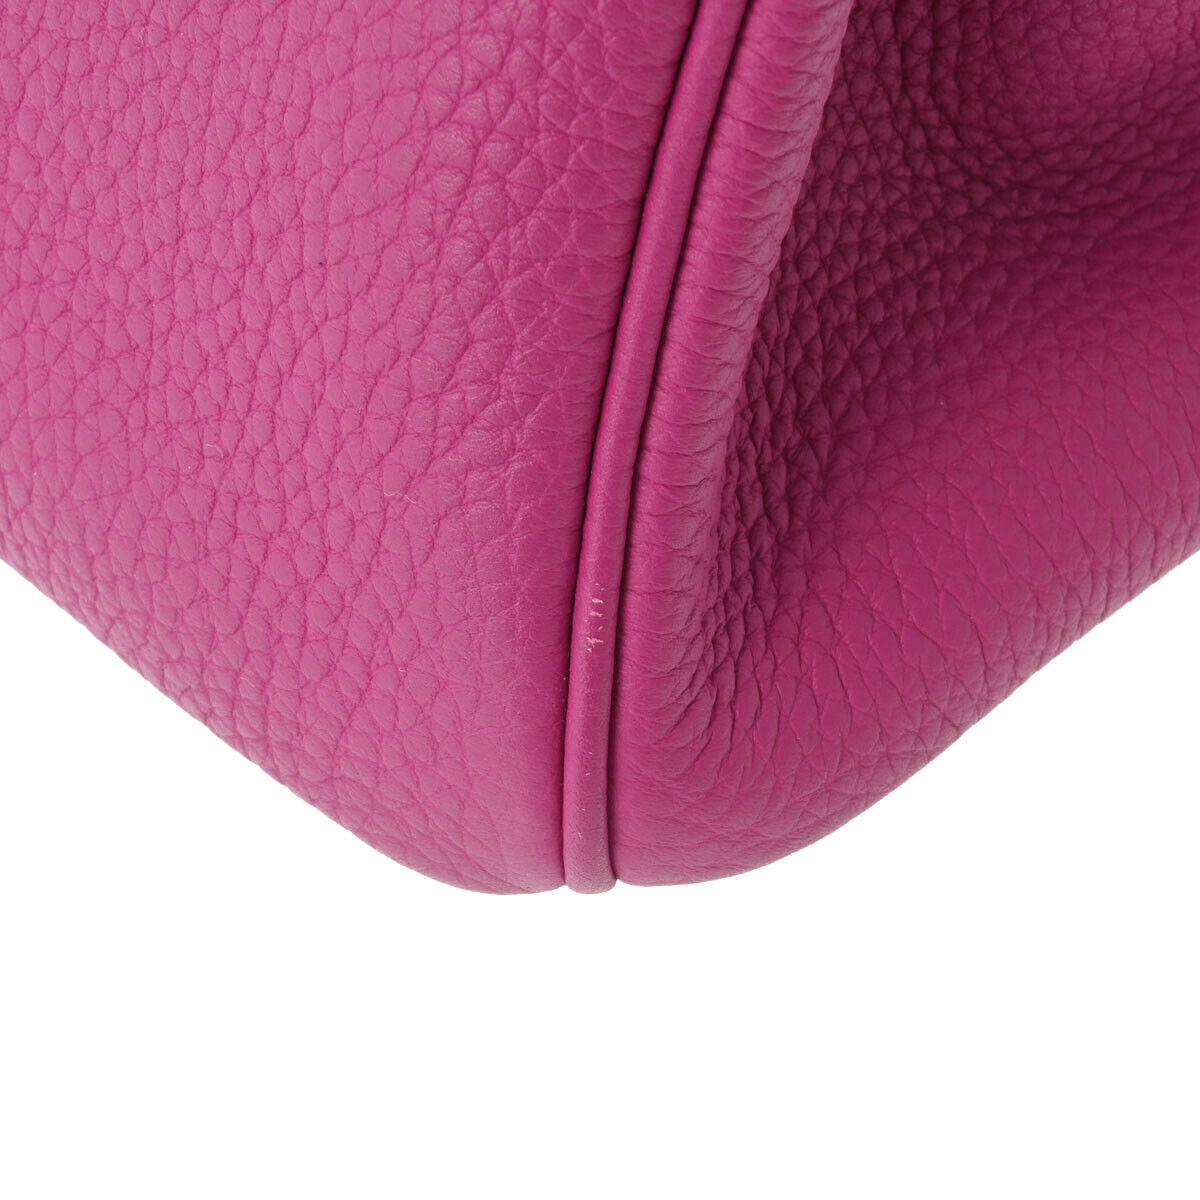 Hermes Pink Togo Leather Palladium Hardware Birkin 30 Bag